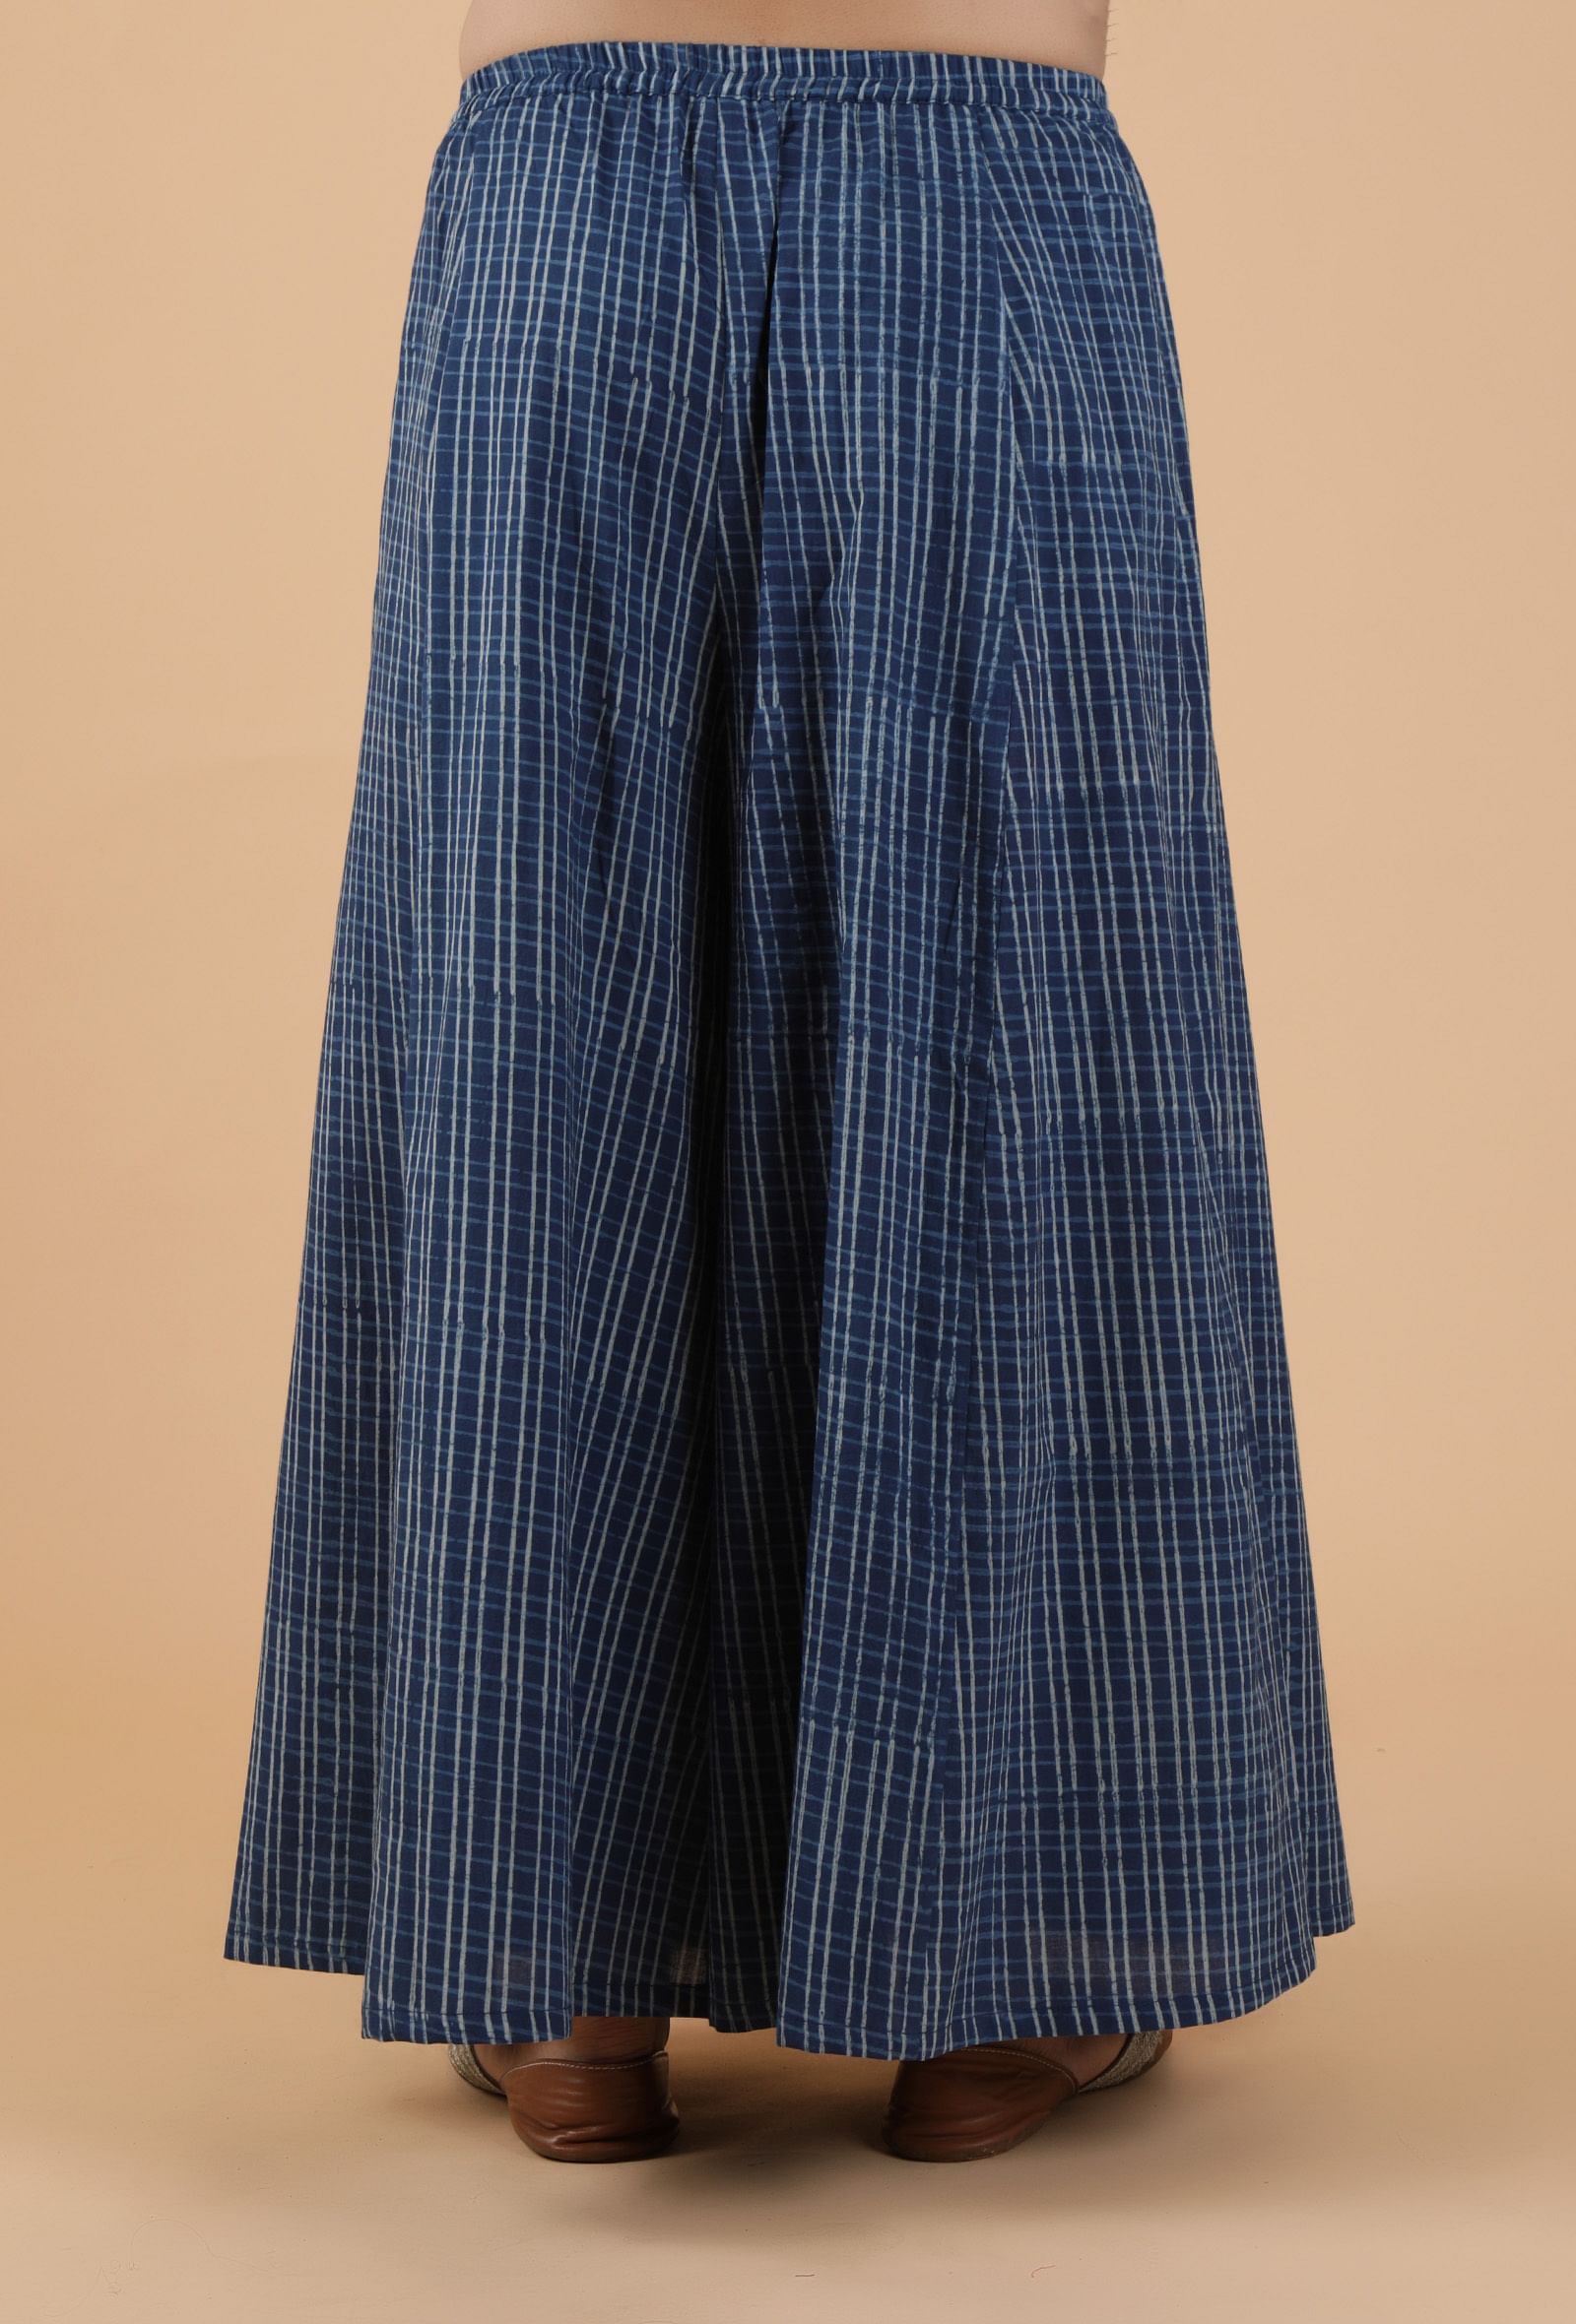 Buy Sea Green Trousers  Pants for Women by INDIBELLE Online  Ajiocom